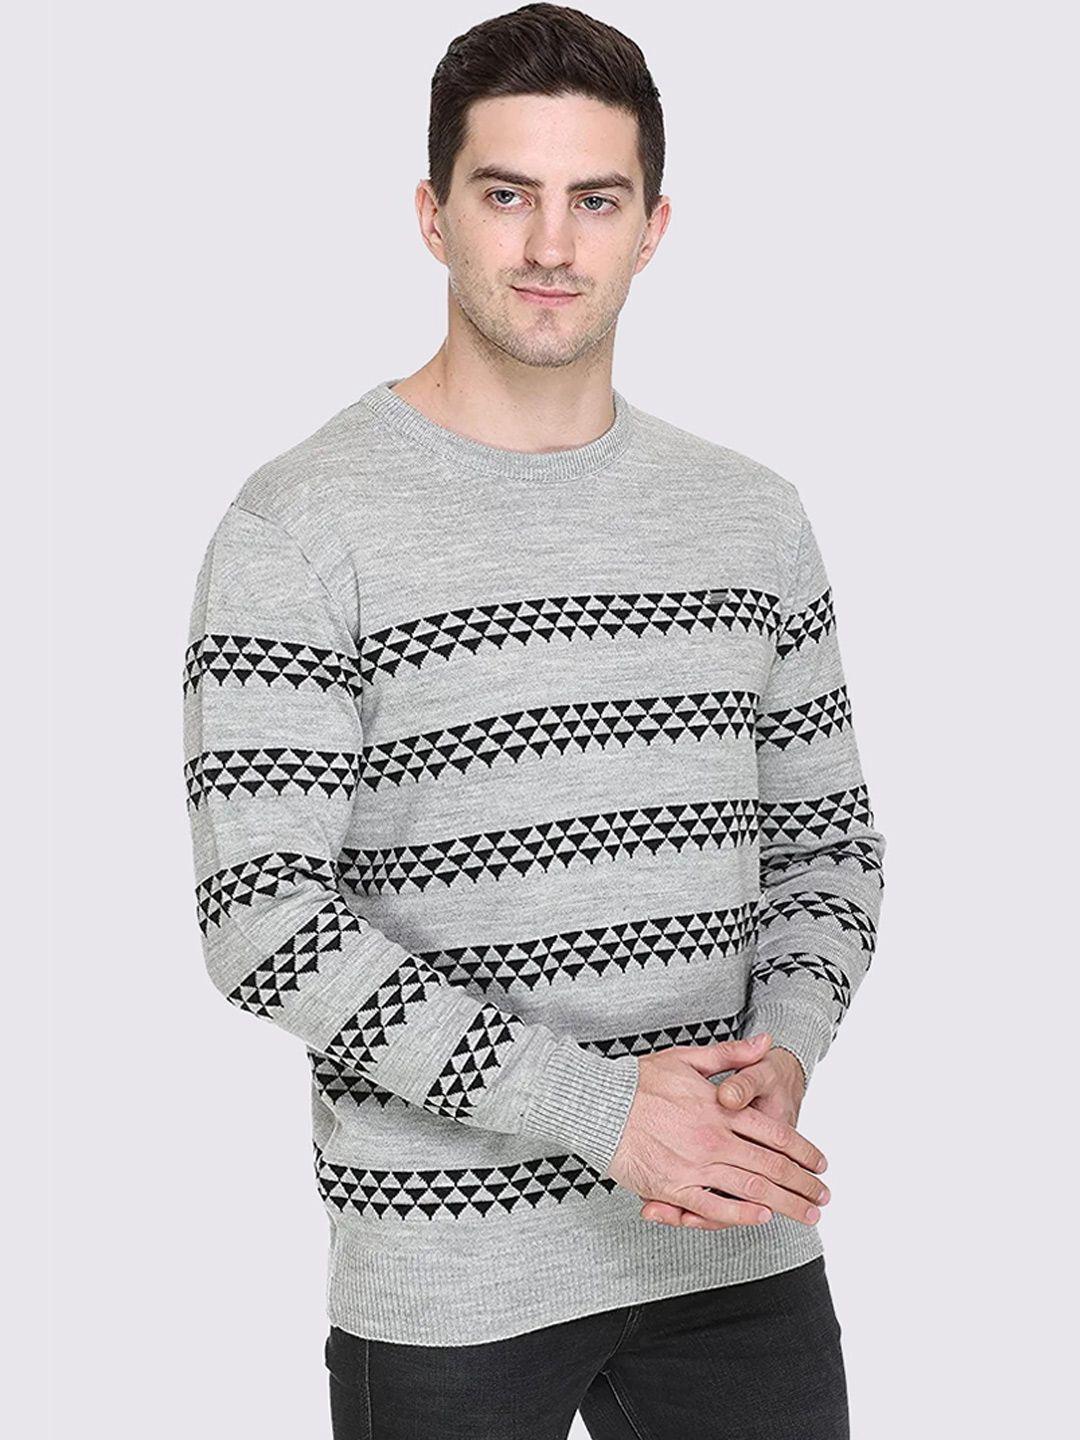 godfrey-men-acrylic-pullover